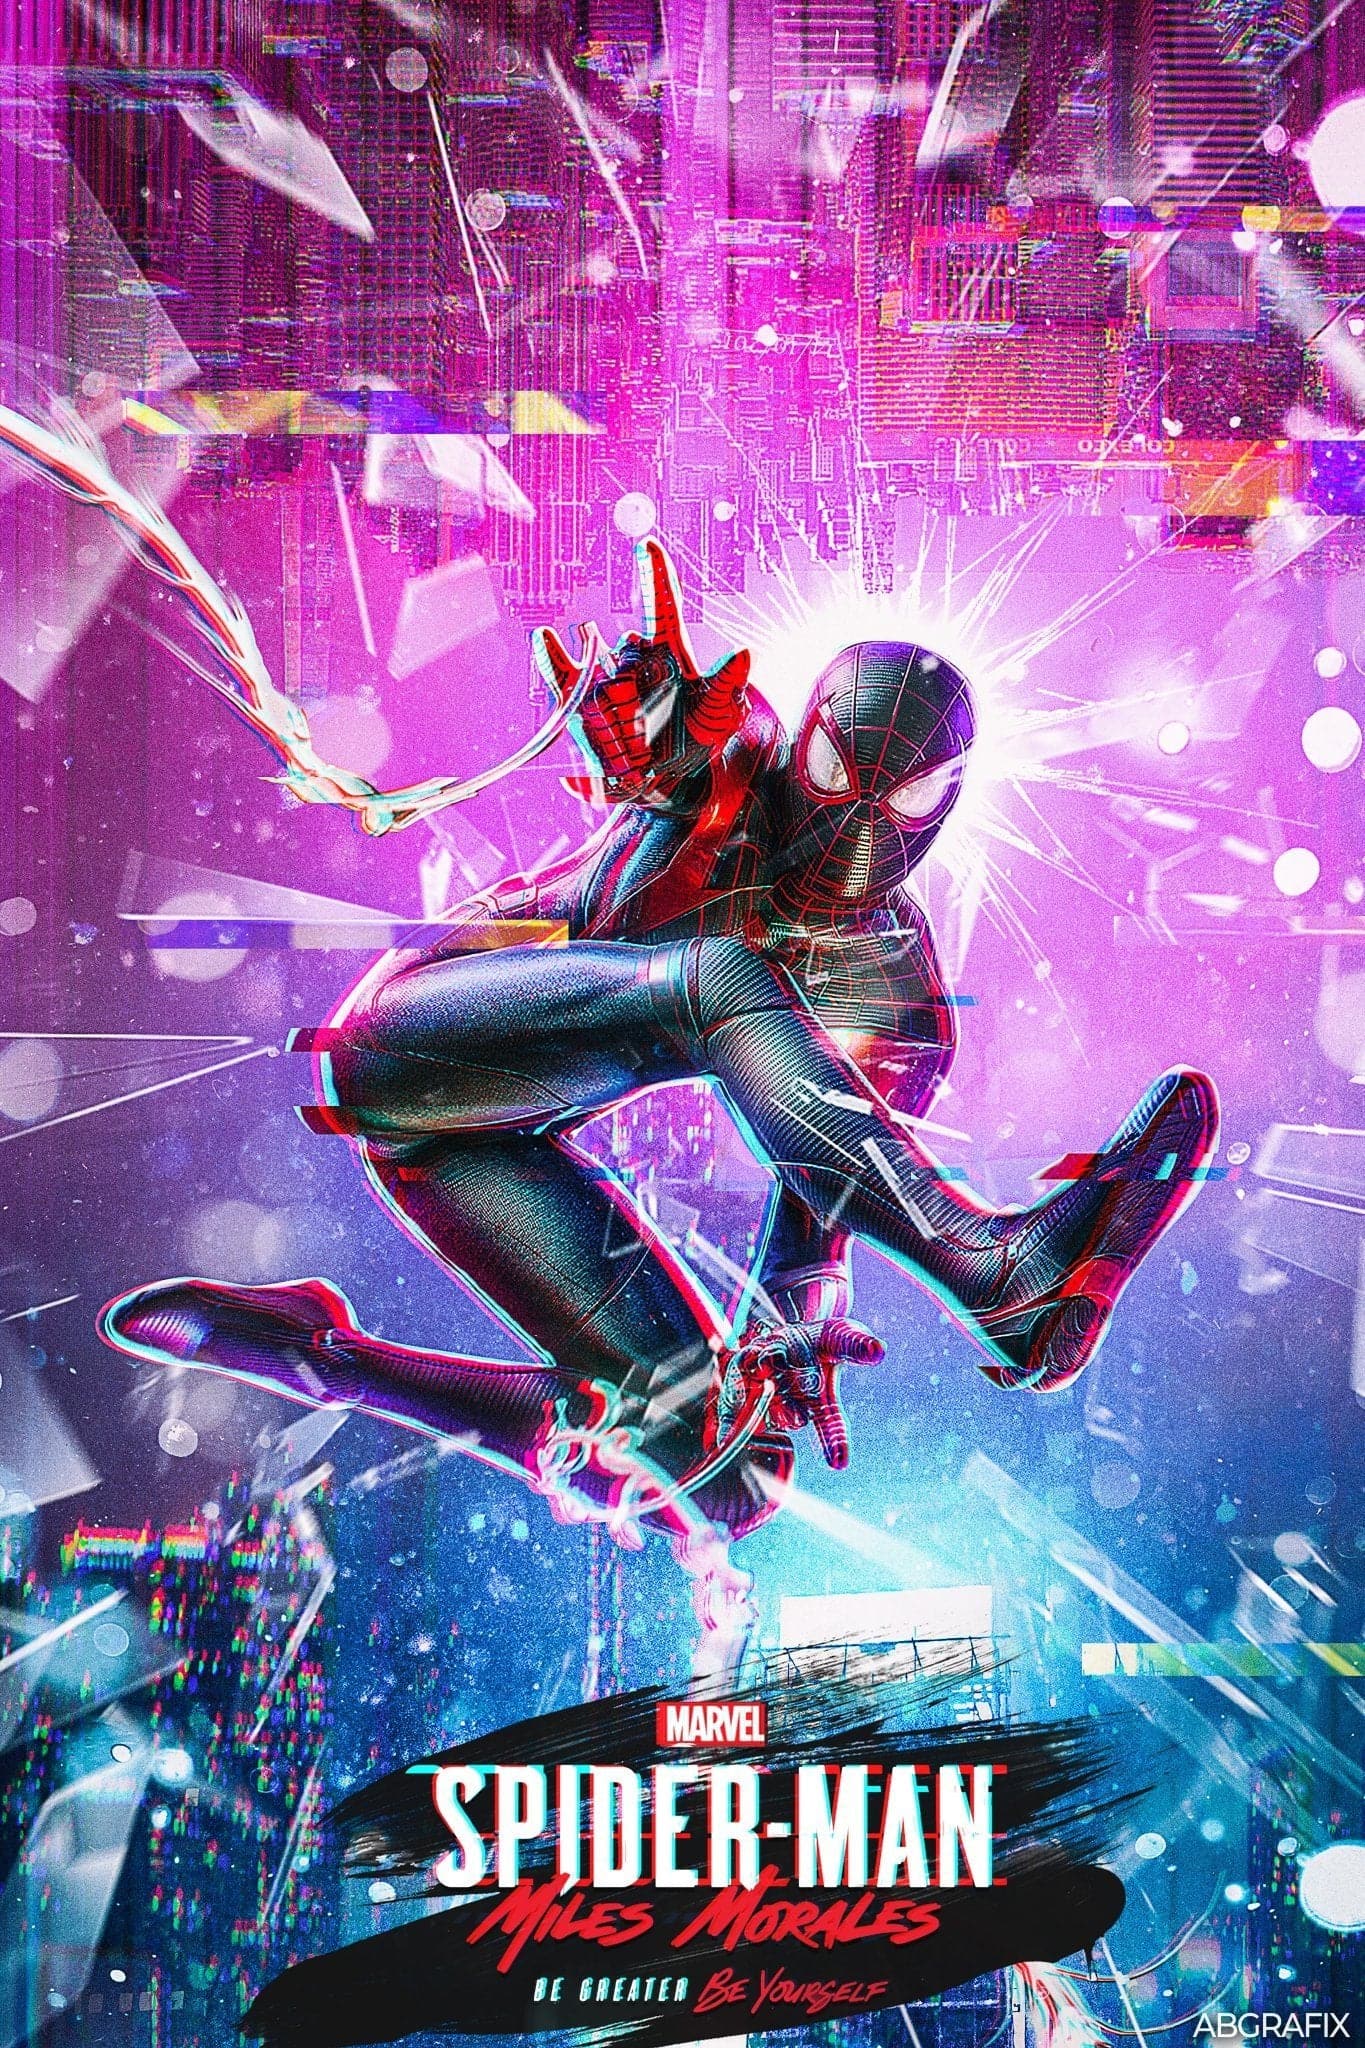 Spider-Man ‘Miles Morales’ Poster - Posters Plug